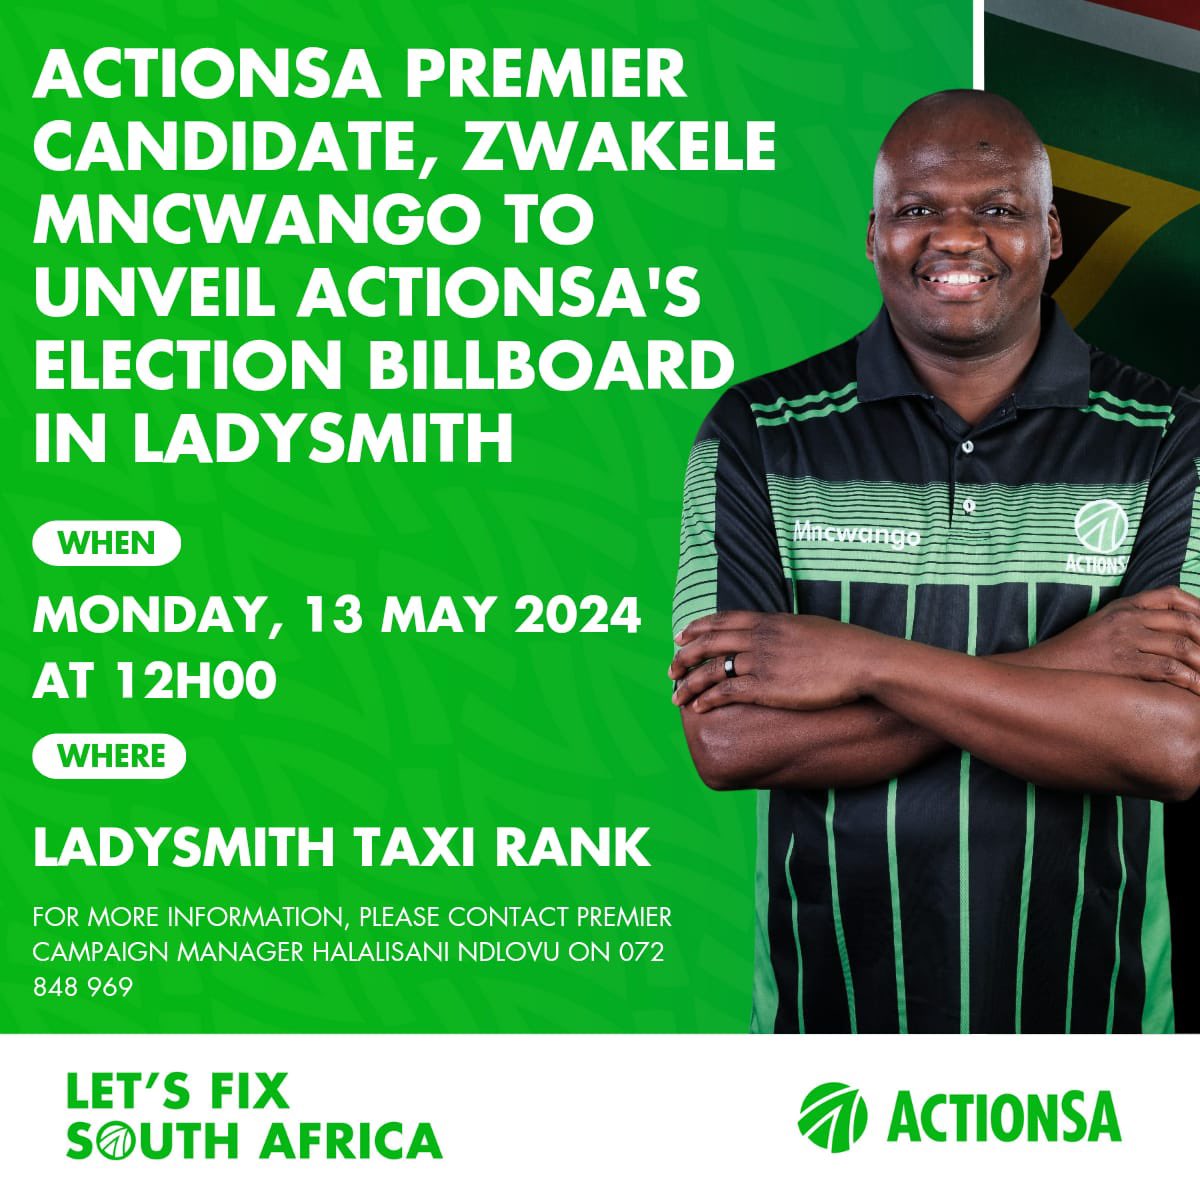 Today Premier Candidate Zwakele Mncwango will be in Ladysmith, KZN to unveil ActionSA’s Election Billboard at the Ladysmith Taxi Rank at 12:00pm, 13 May 2024. 

#ZwakeleMncwango4Premier #LetsFixOurProvince #OnlyActionWillFixSA #YourKZNOwnIt #RoadToNPE2024